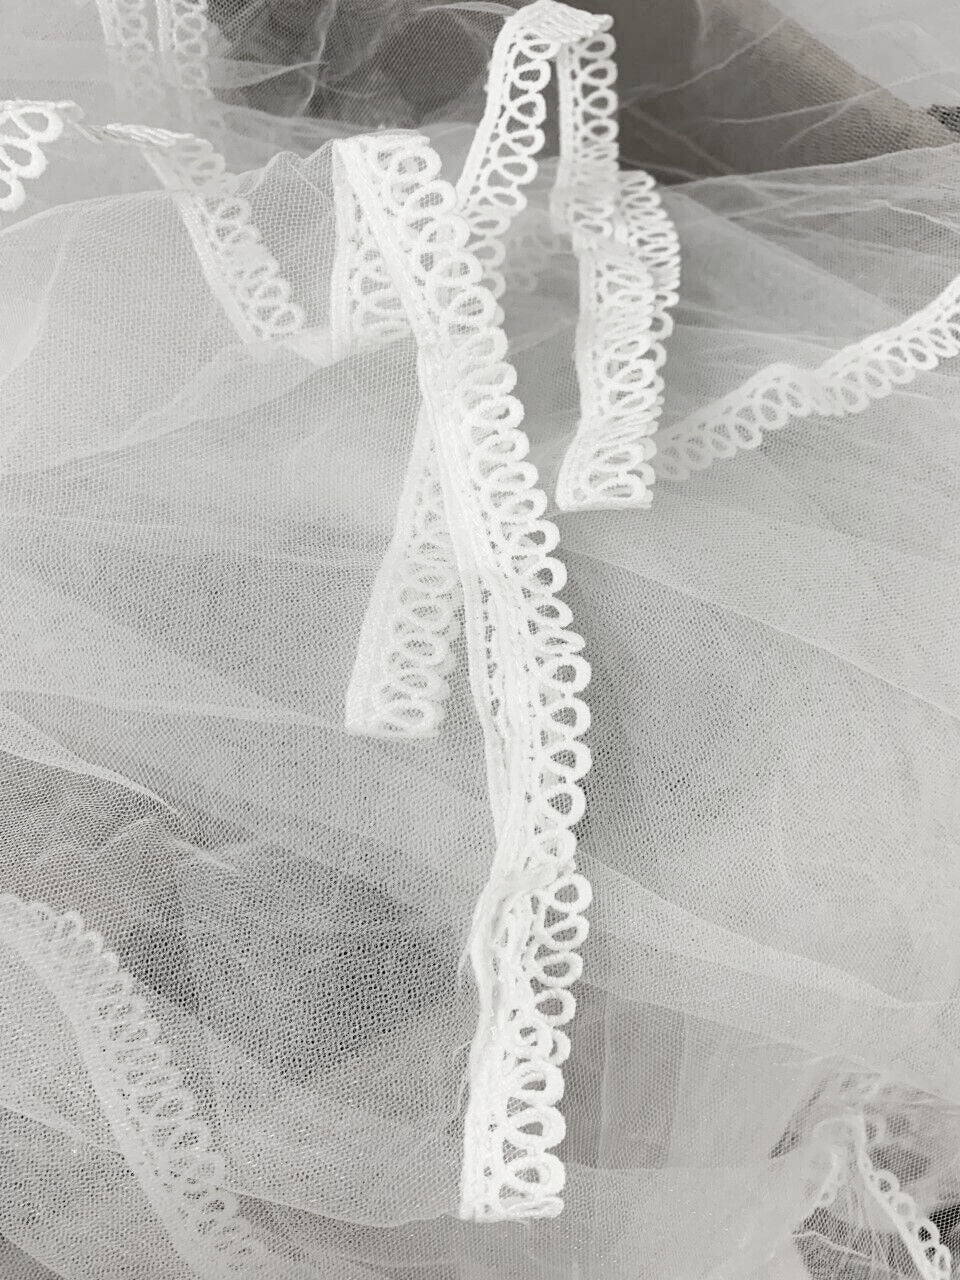 Caprilite Lace White Bridal Lace Wedding Veil on Comb